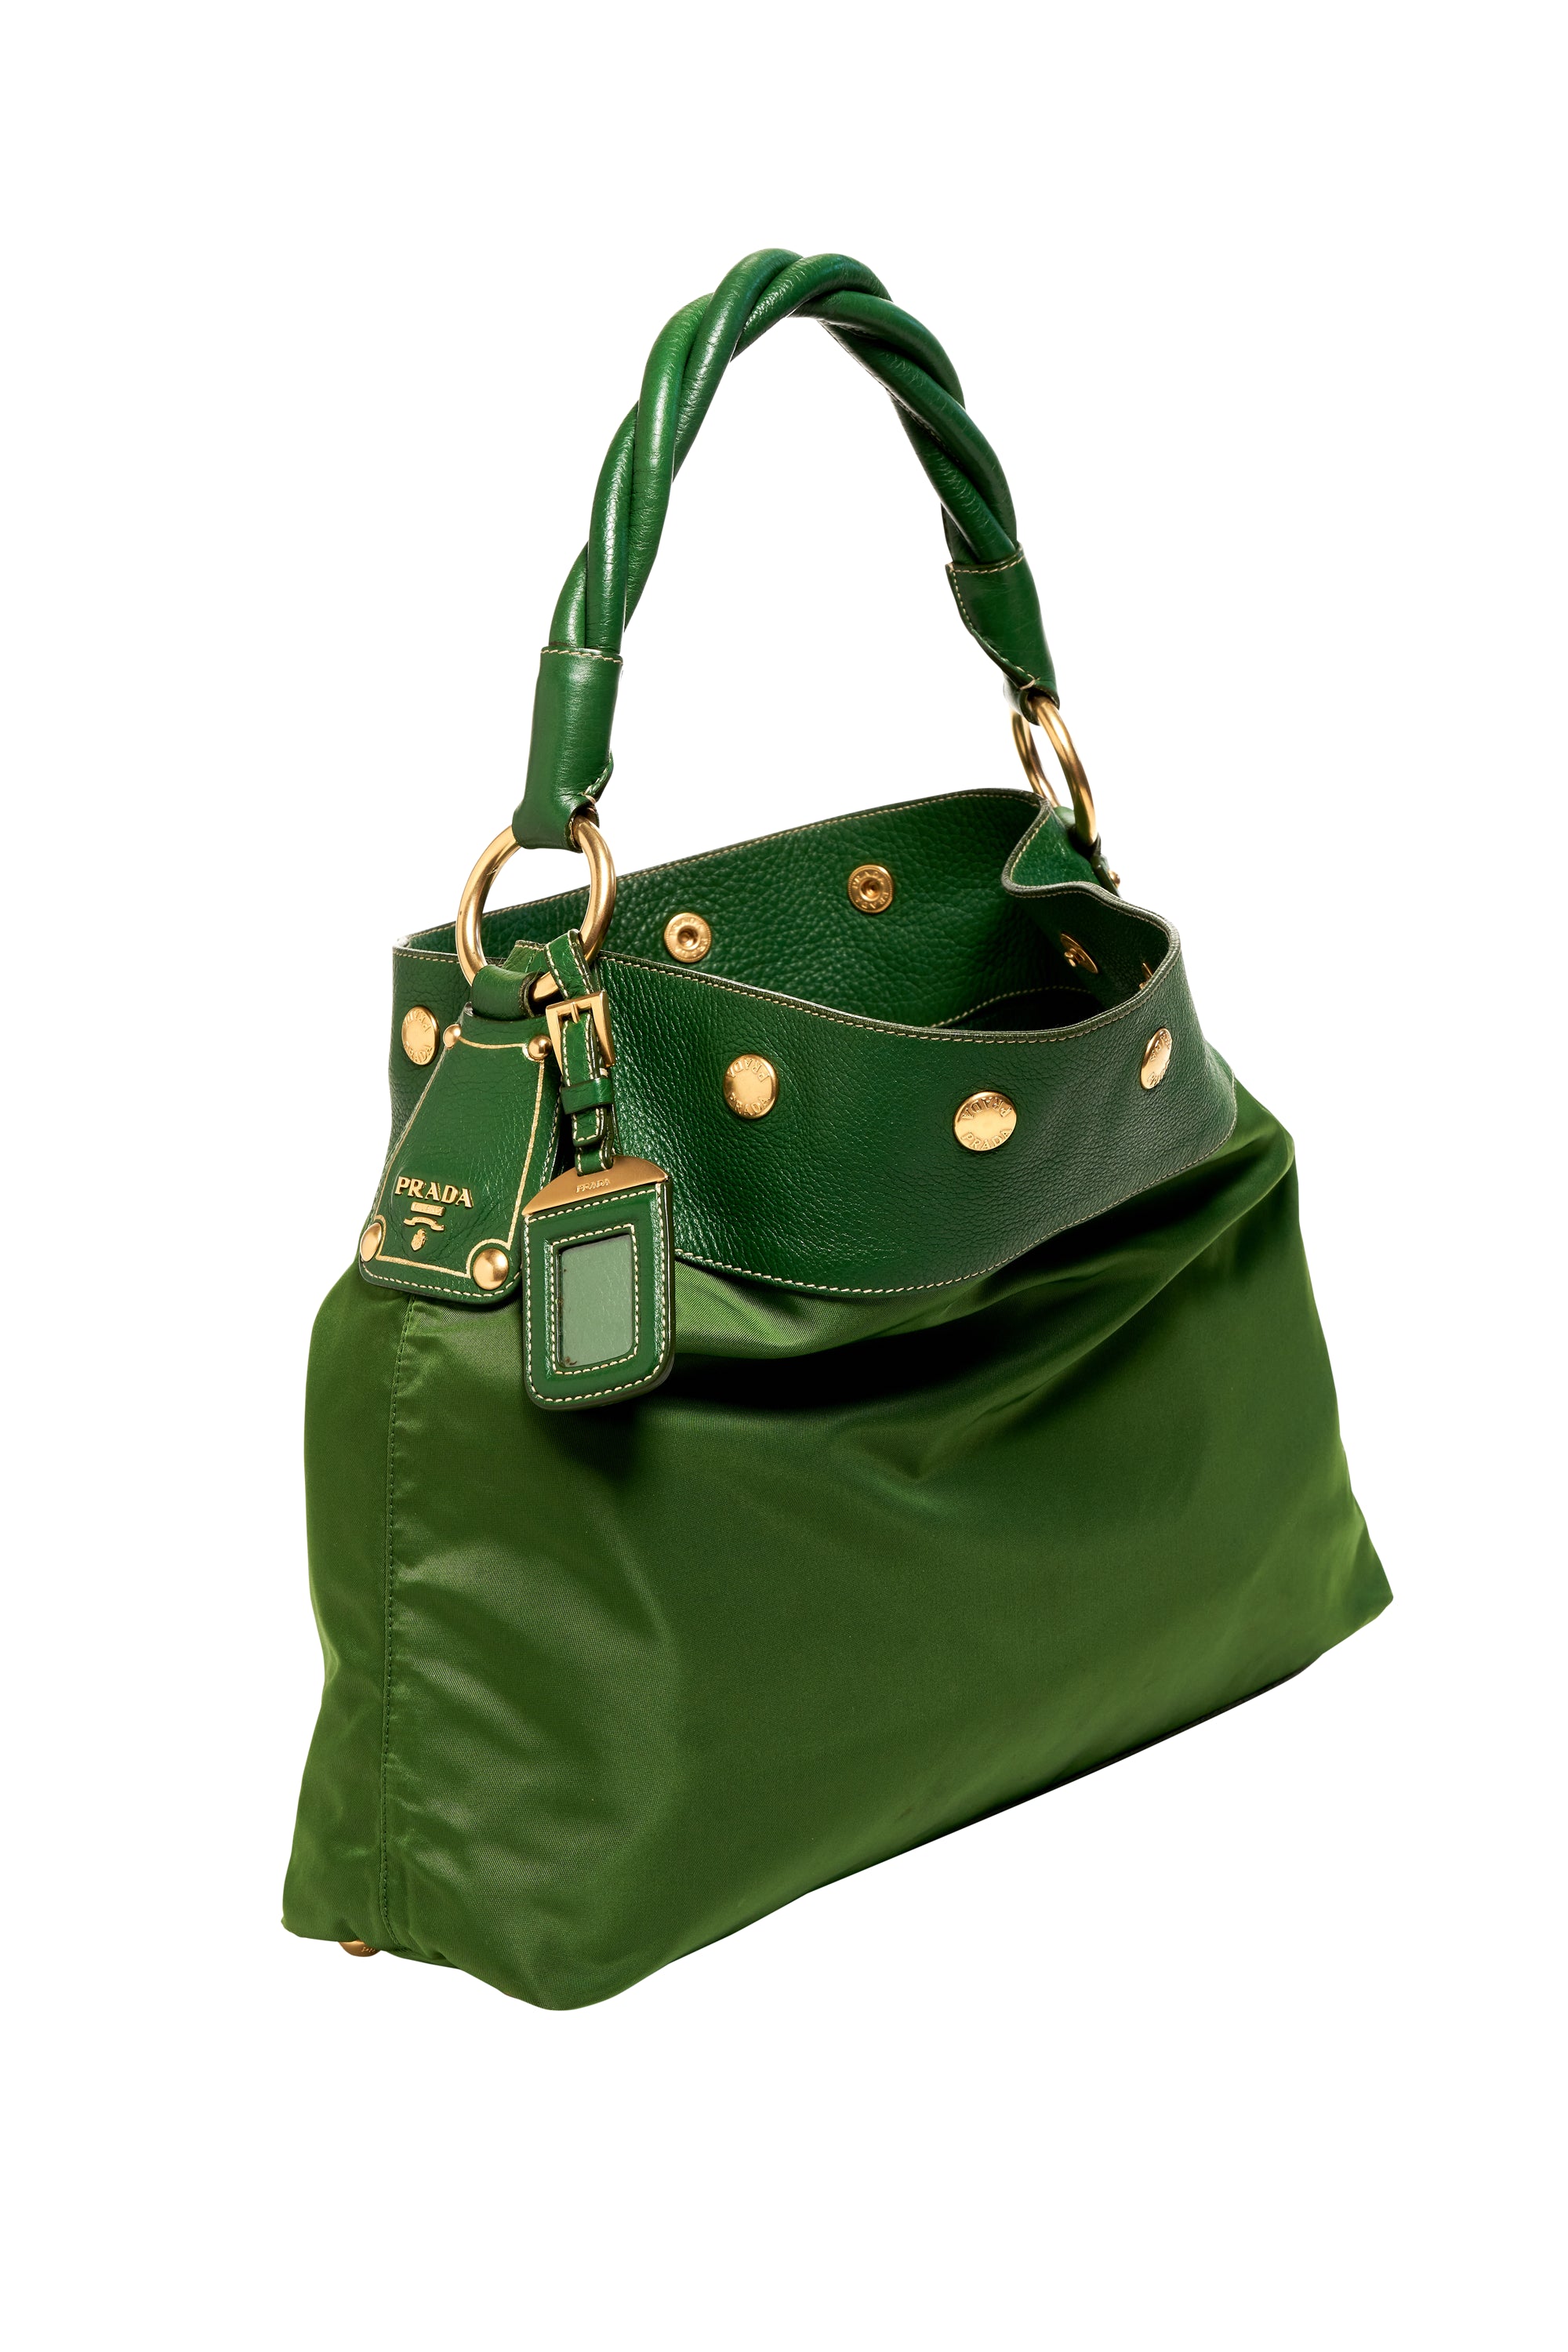 Prada Green Nylon Top Handle Tessuto Bag